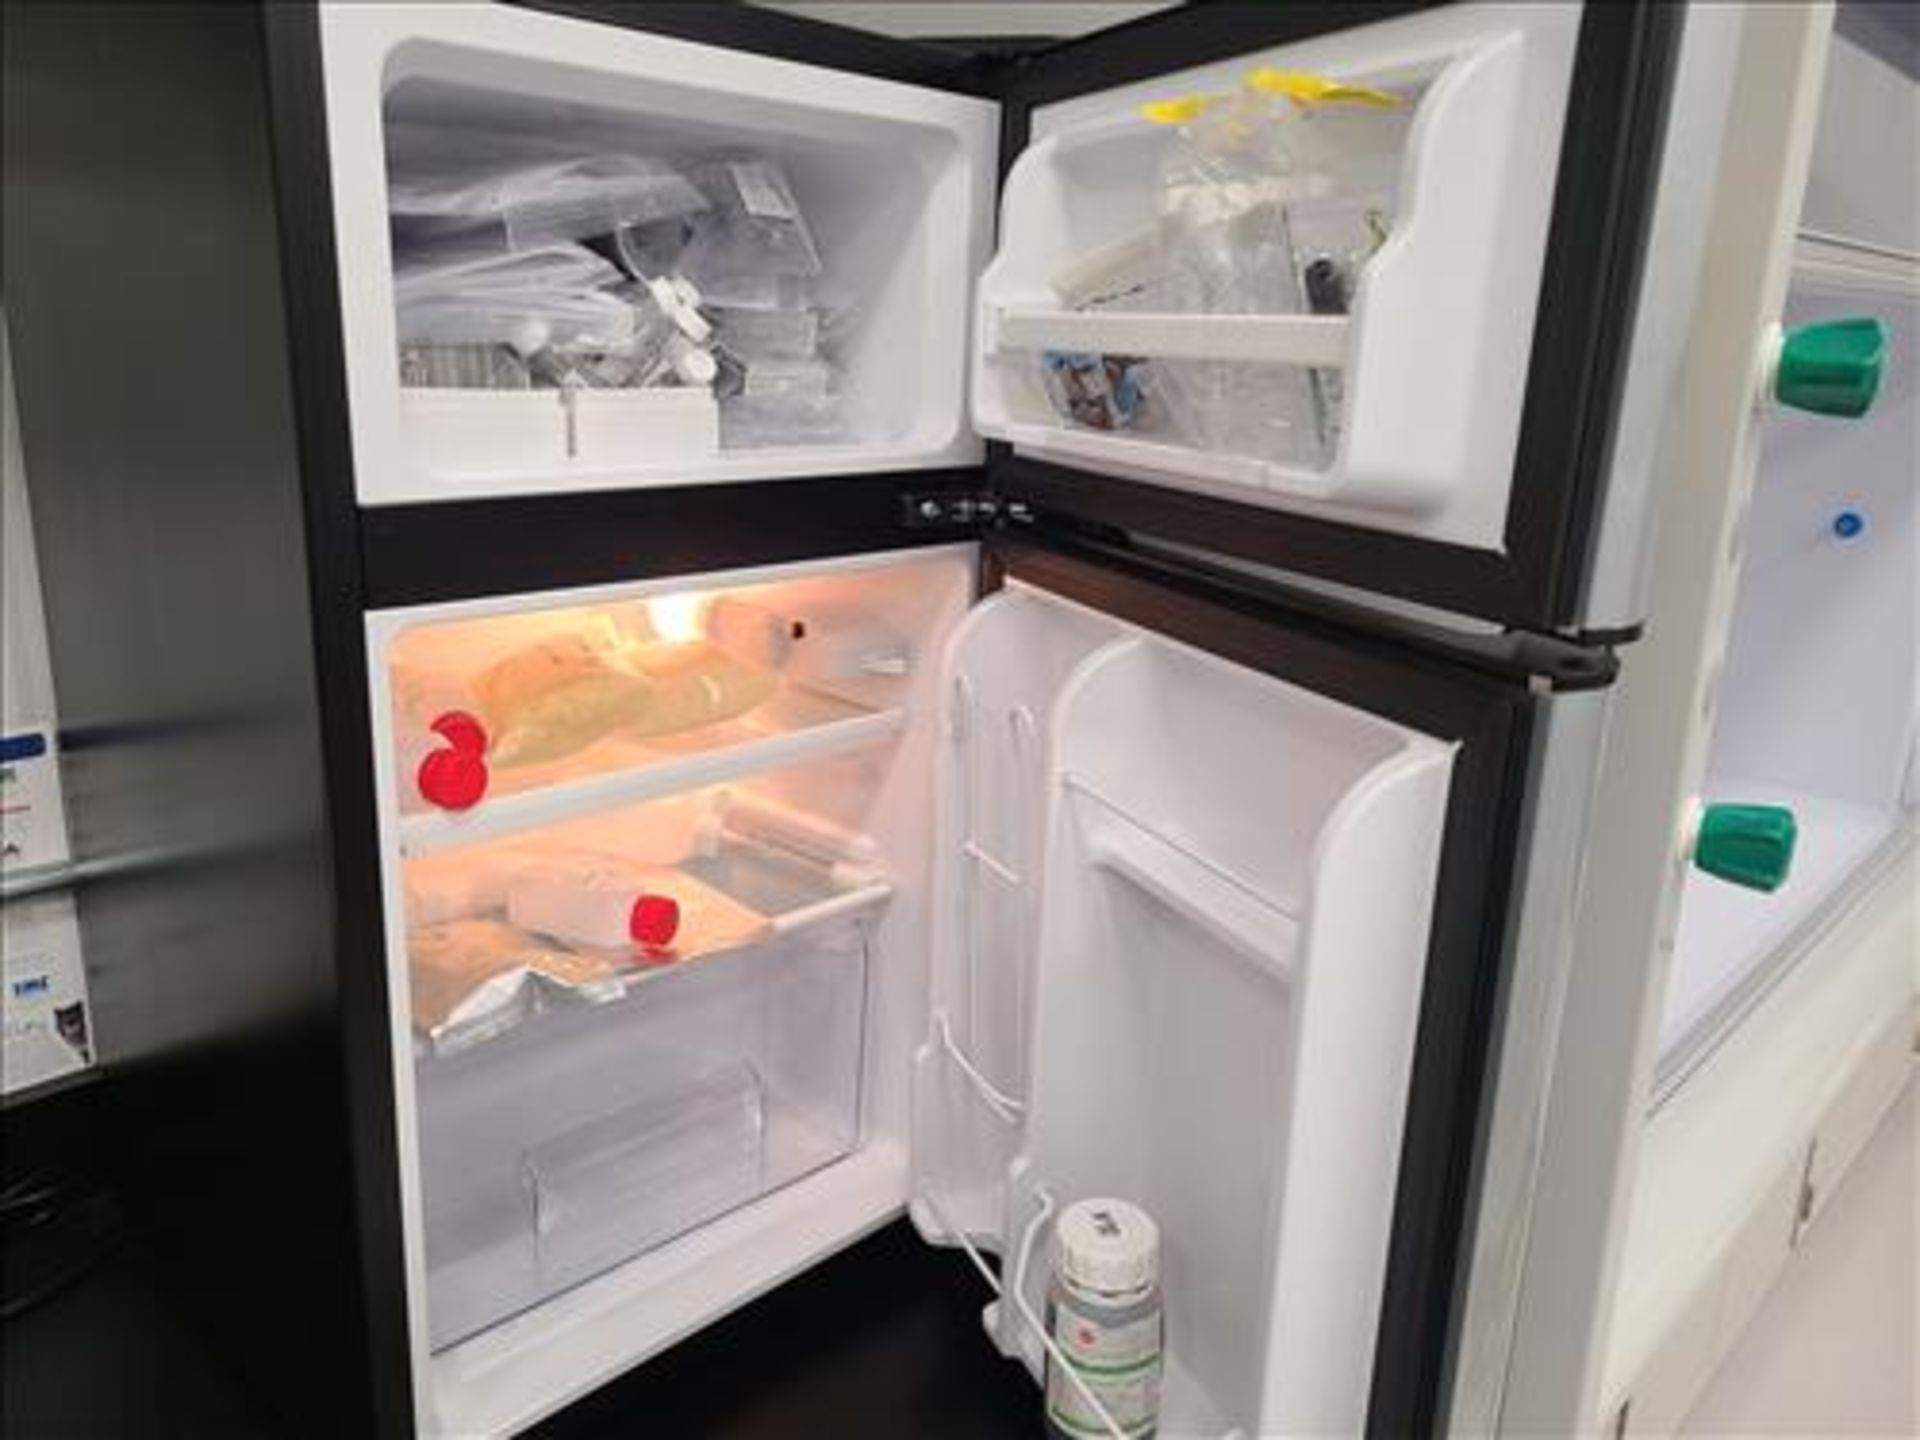 Costway mini fridge/freezer [Loc. Packaging 1, Lab] - Image 2 of 3